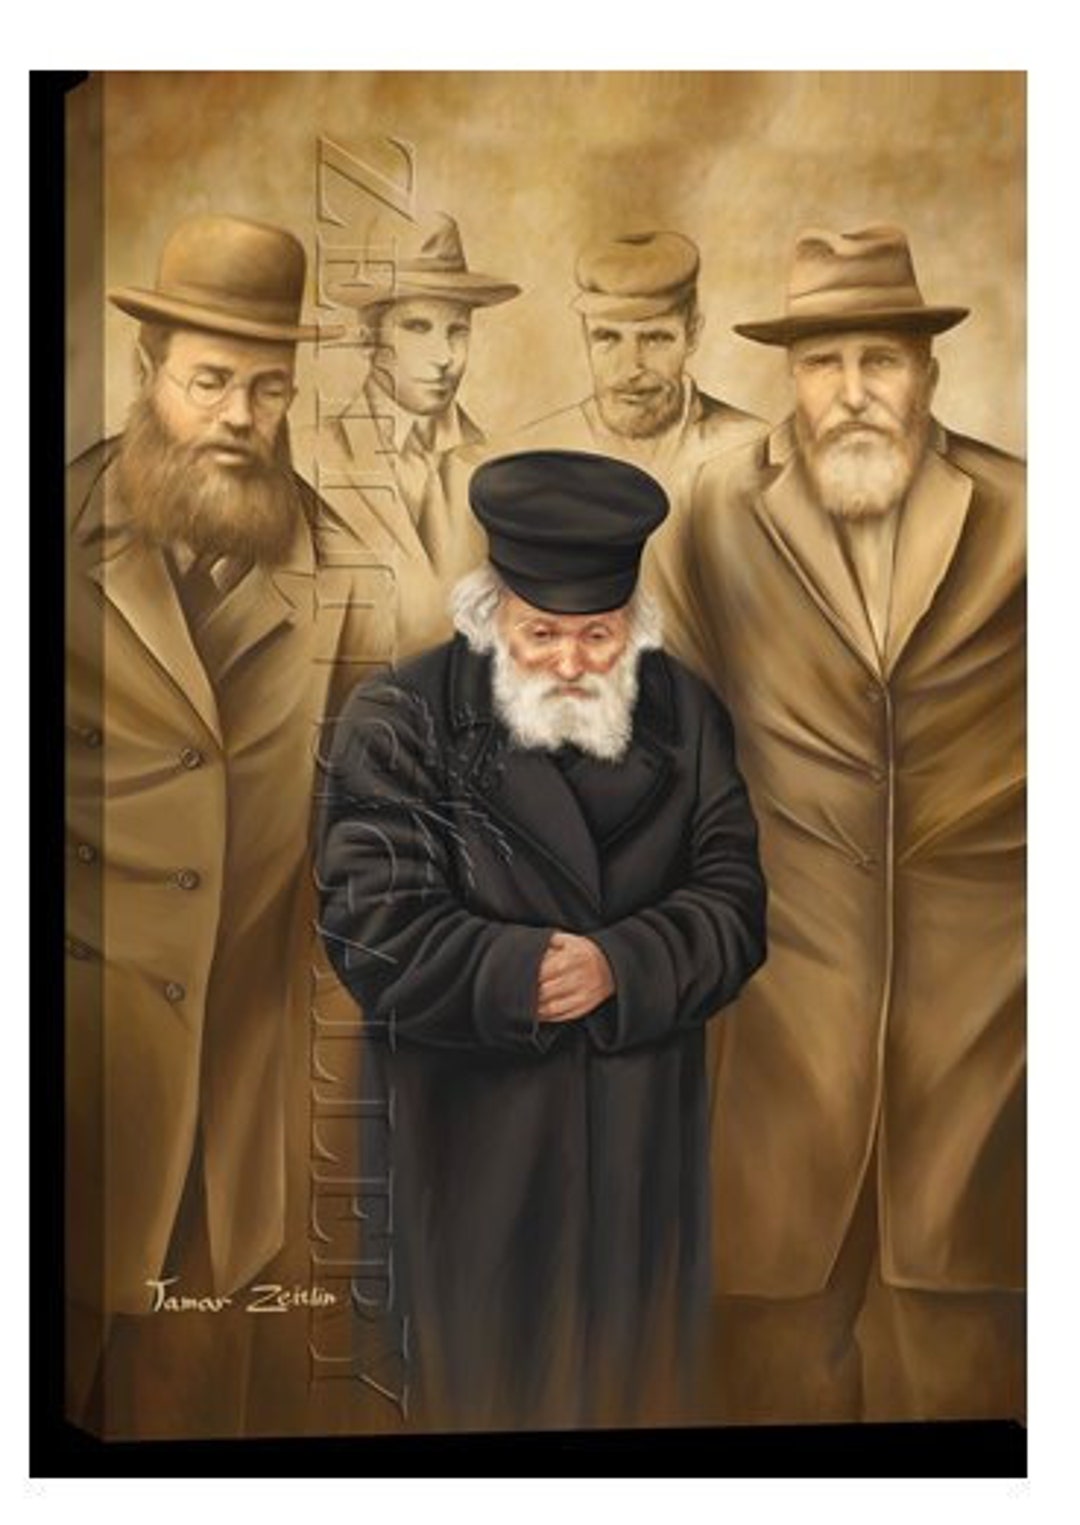 The Chofetz Chaim Rabbi Yisrael Meir Ha-kohen Kagan